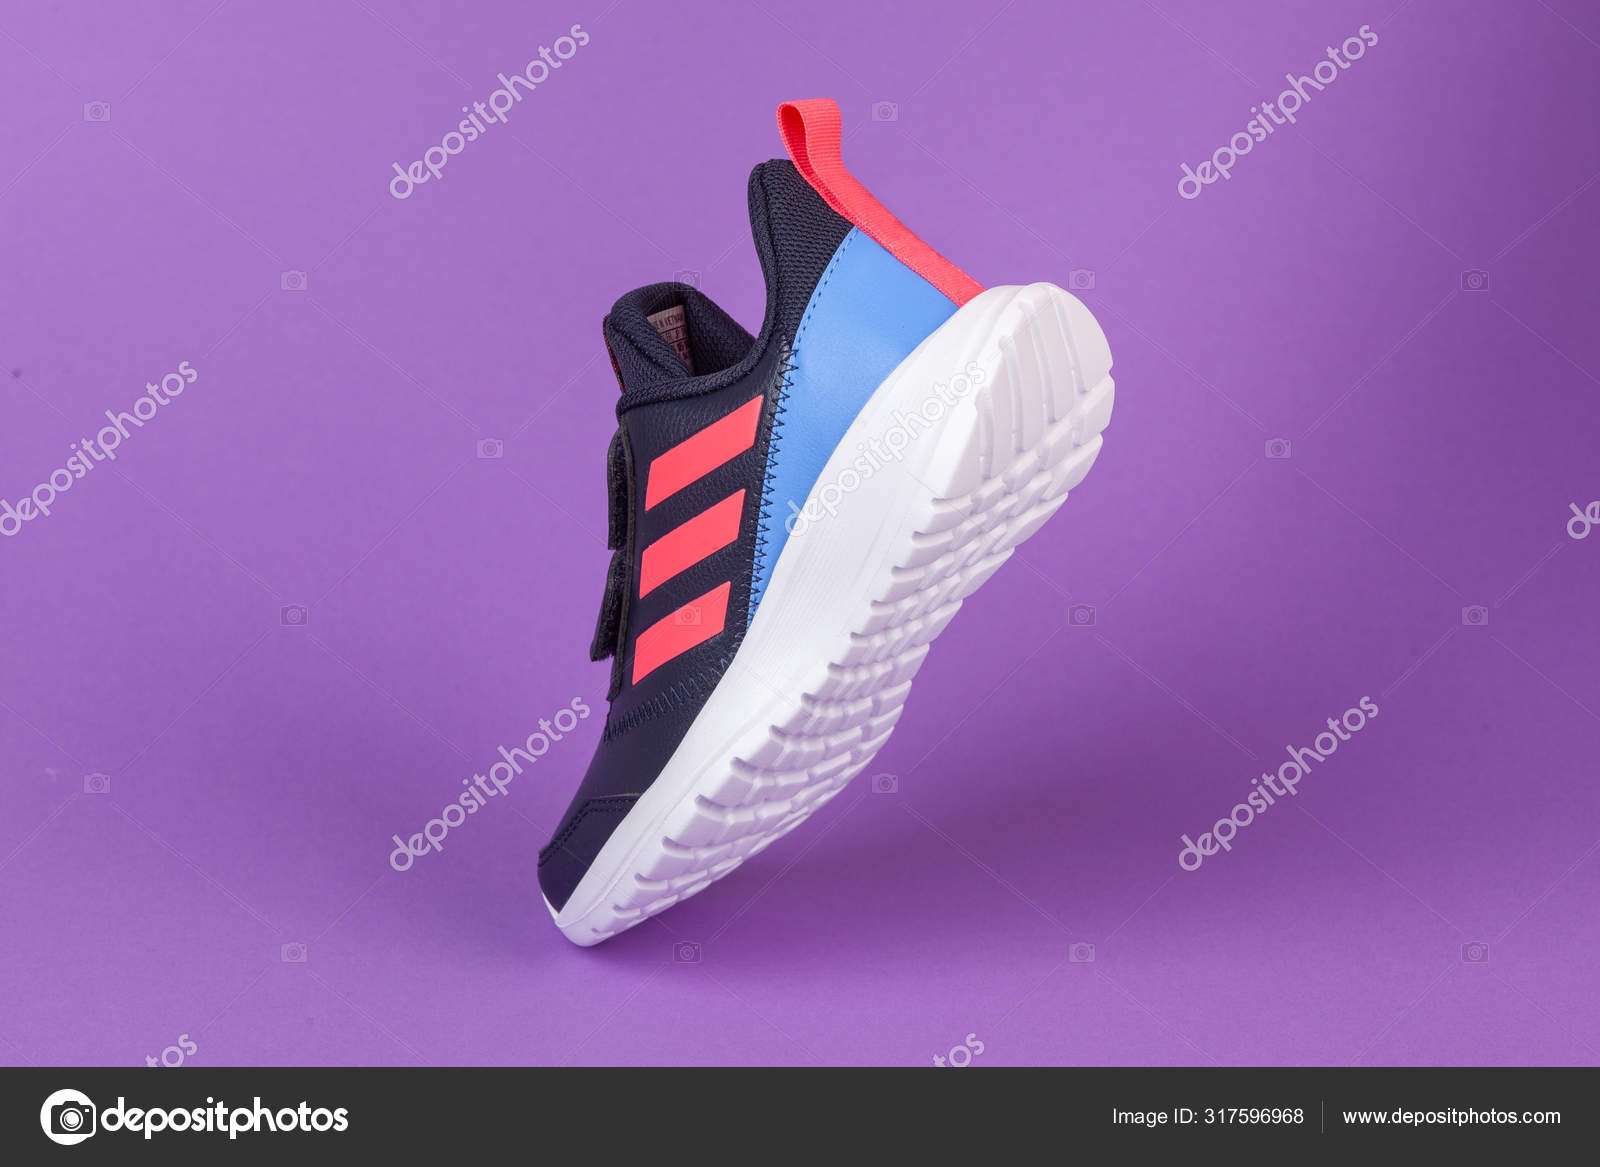 Varna , - AUGUST 13, 2019 : ADIDAS ALTA RUN sport purple background. Product shot. Adidas